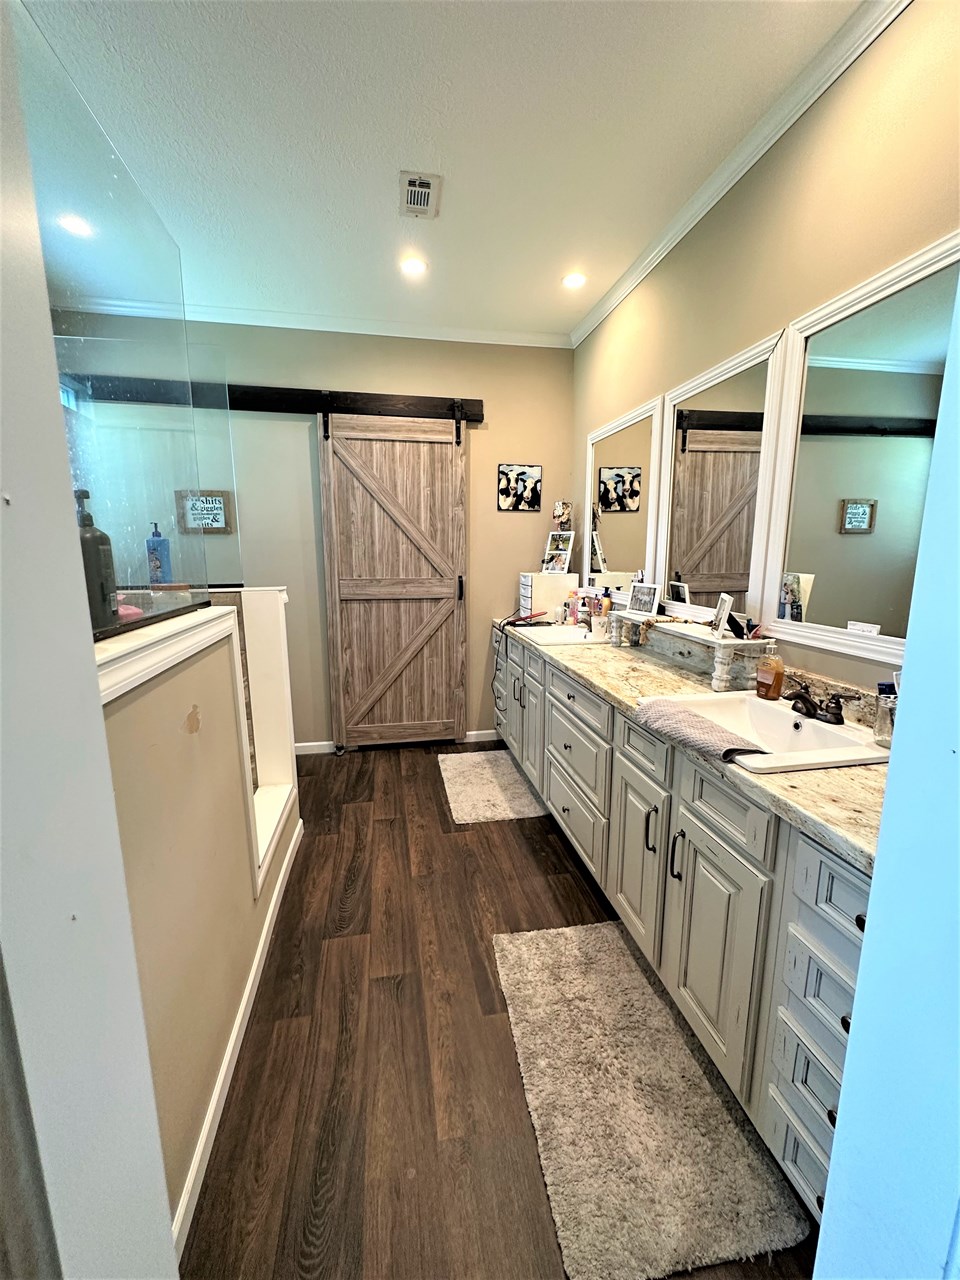 master bathroom - barn door leads into bath tub room with seating area